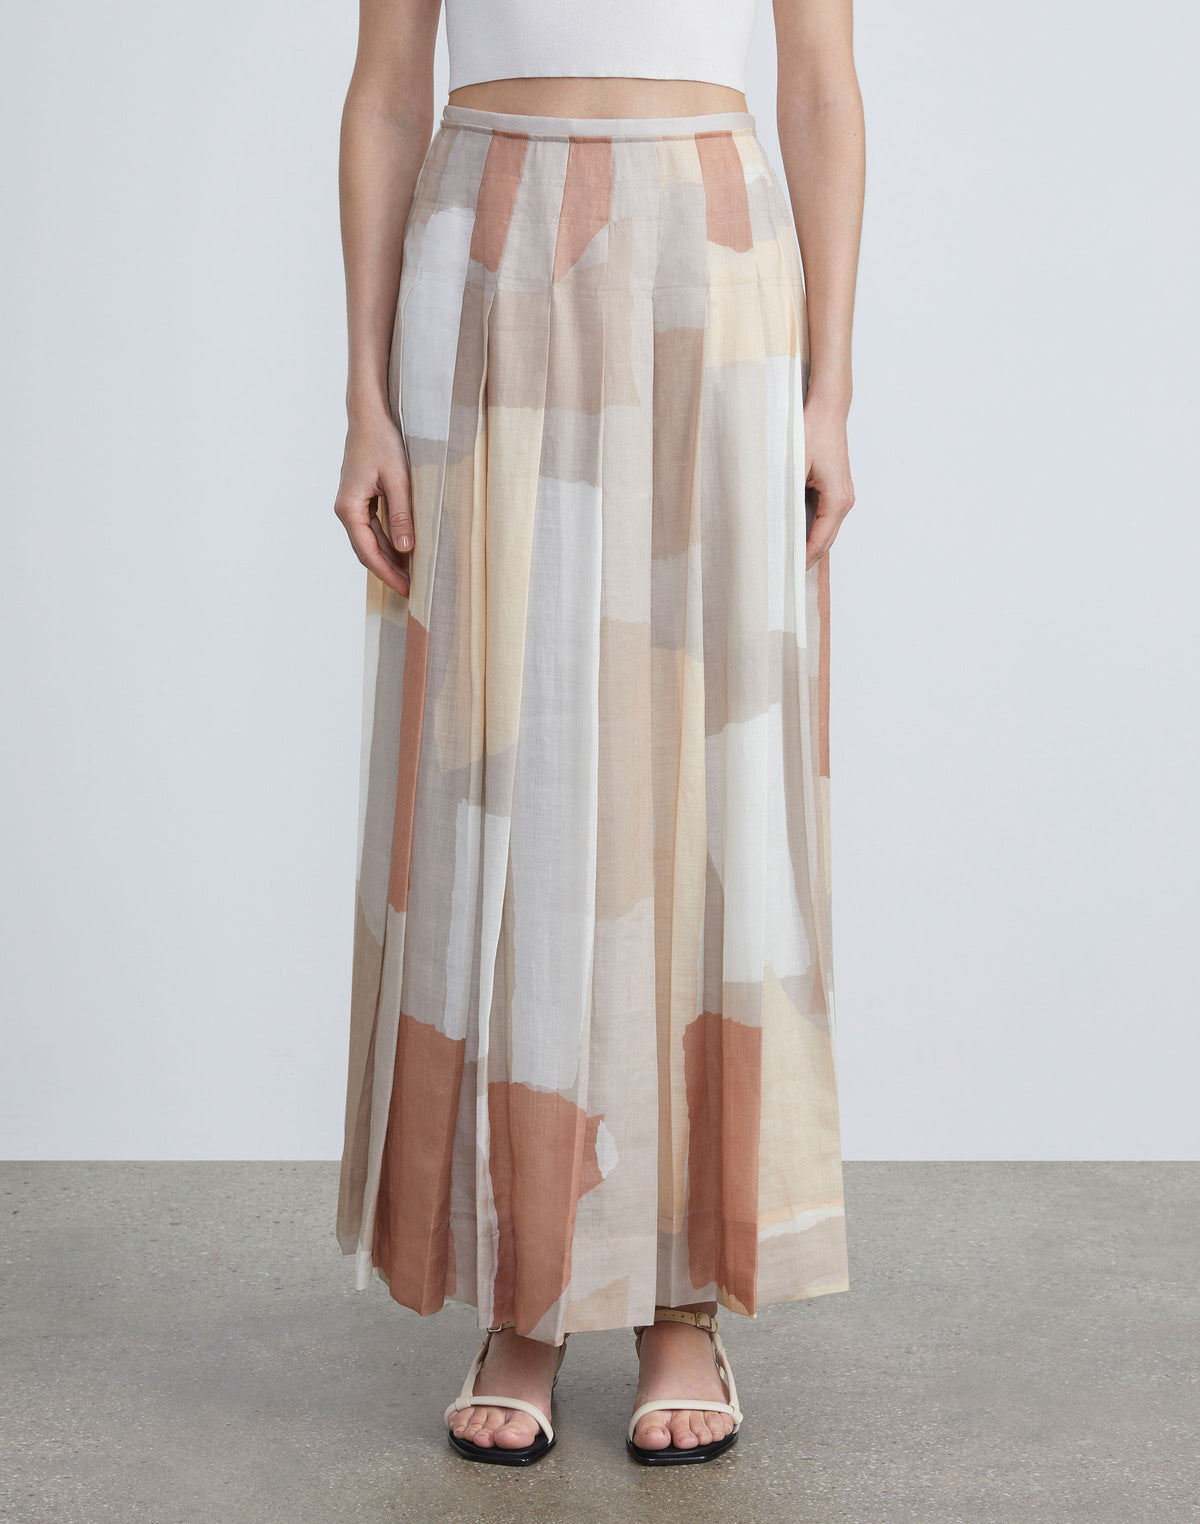 Papier Print Sustainable Gemma Cloth Voile Pleated Skirt LAFAYETTE 148